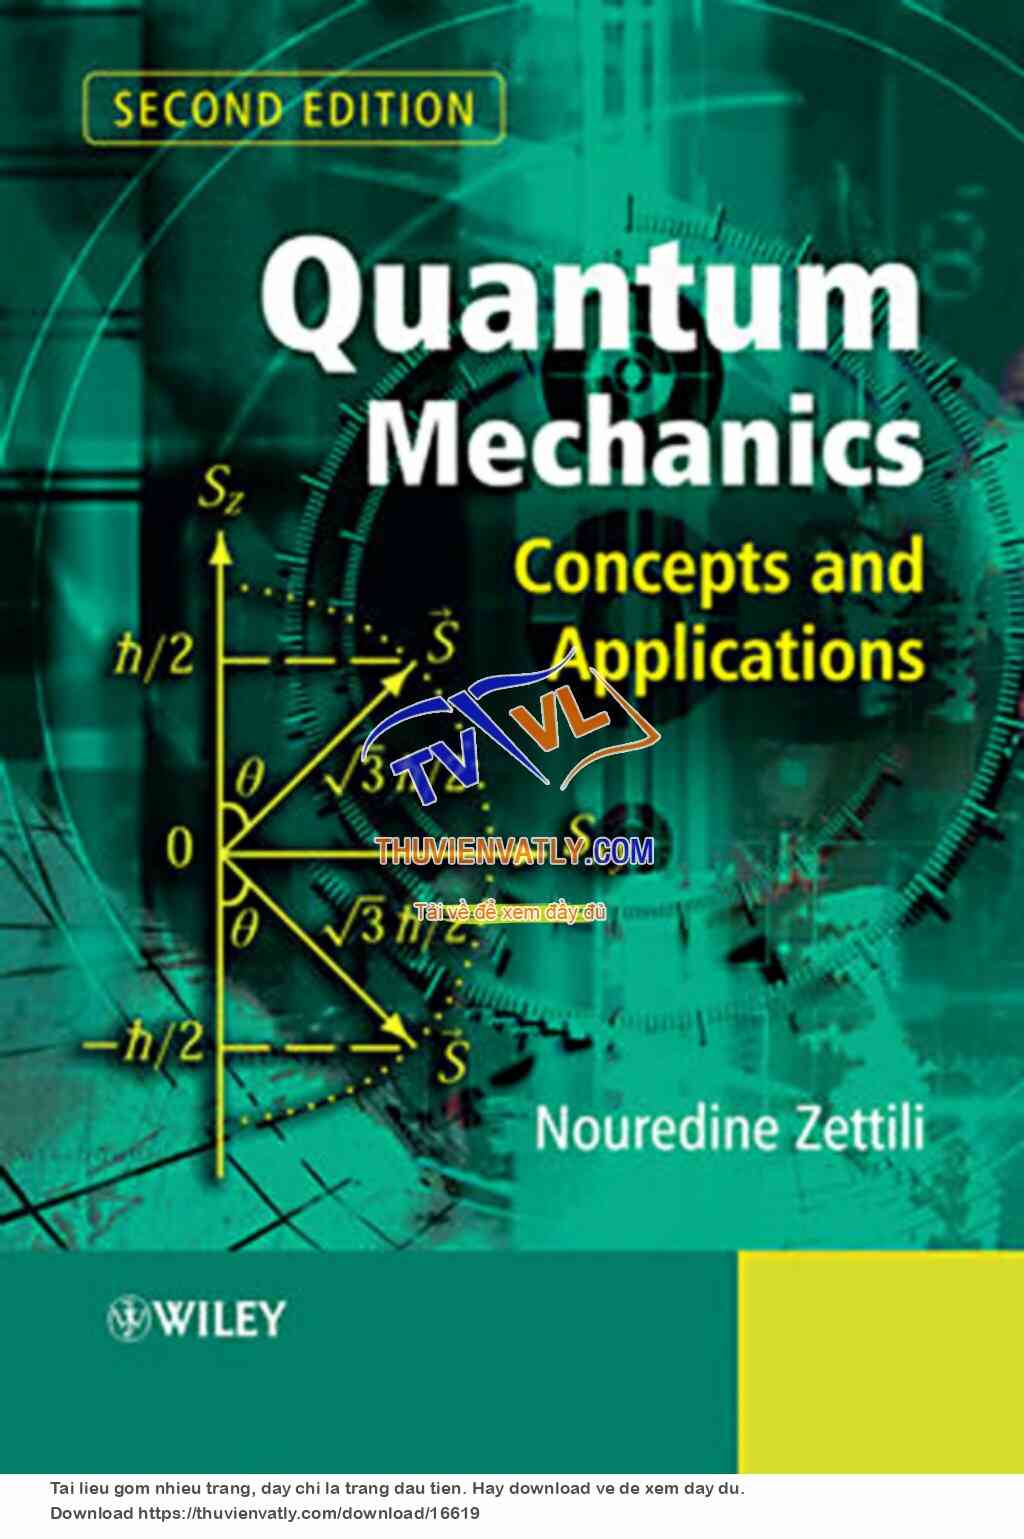 Quantum Mechanics Concepts and Applications (Second Edition, Nouredine Zettili, Wiley  2009)